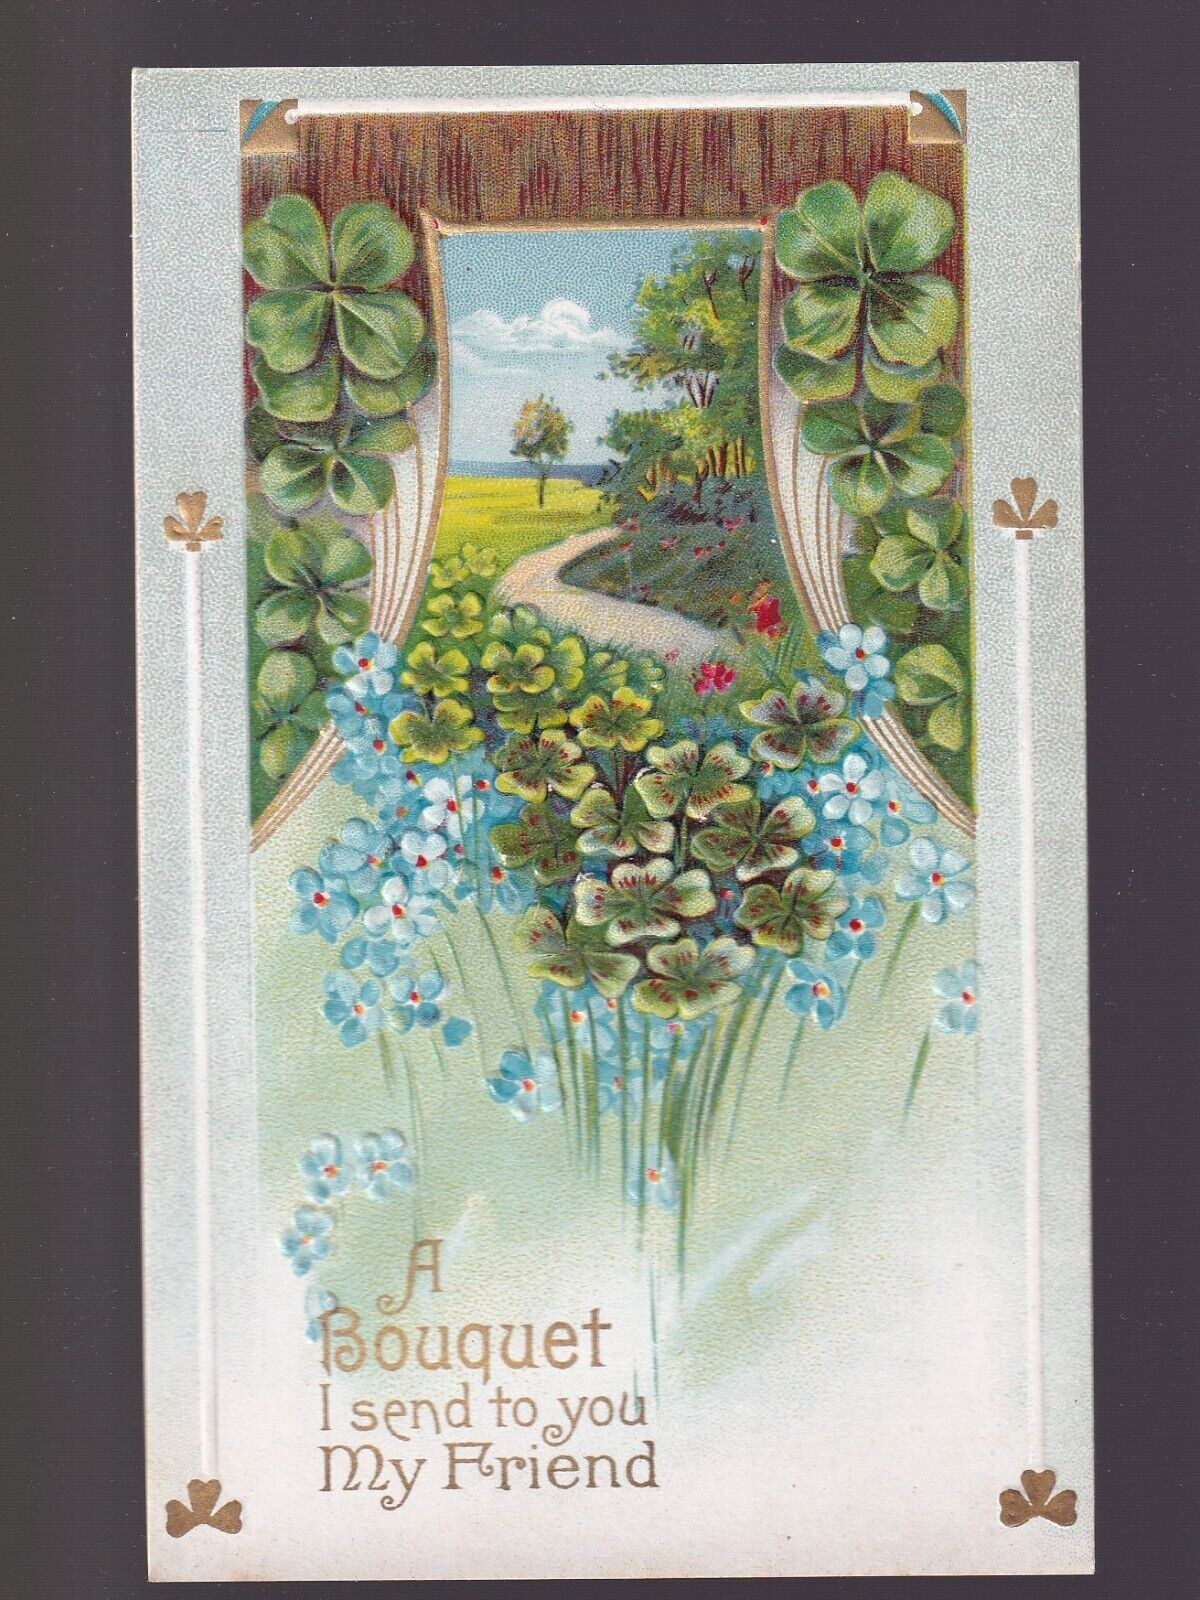 VTG Postcard Antique, 1907-15, A Bouquet I Send to My Friend, Floral Greeting